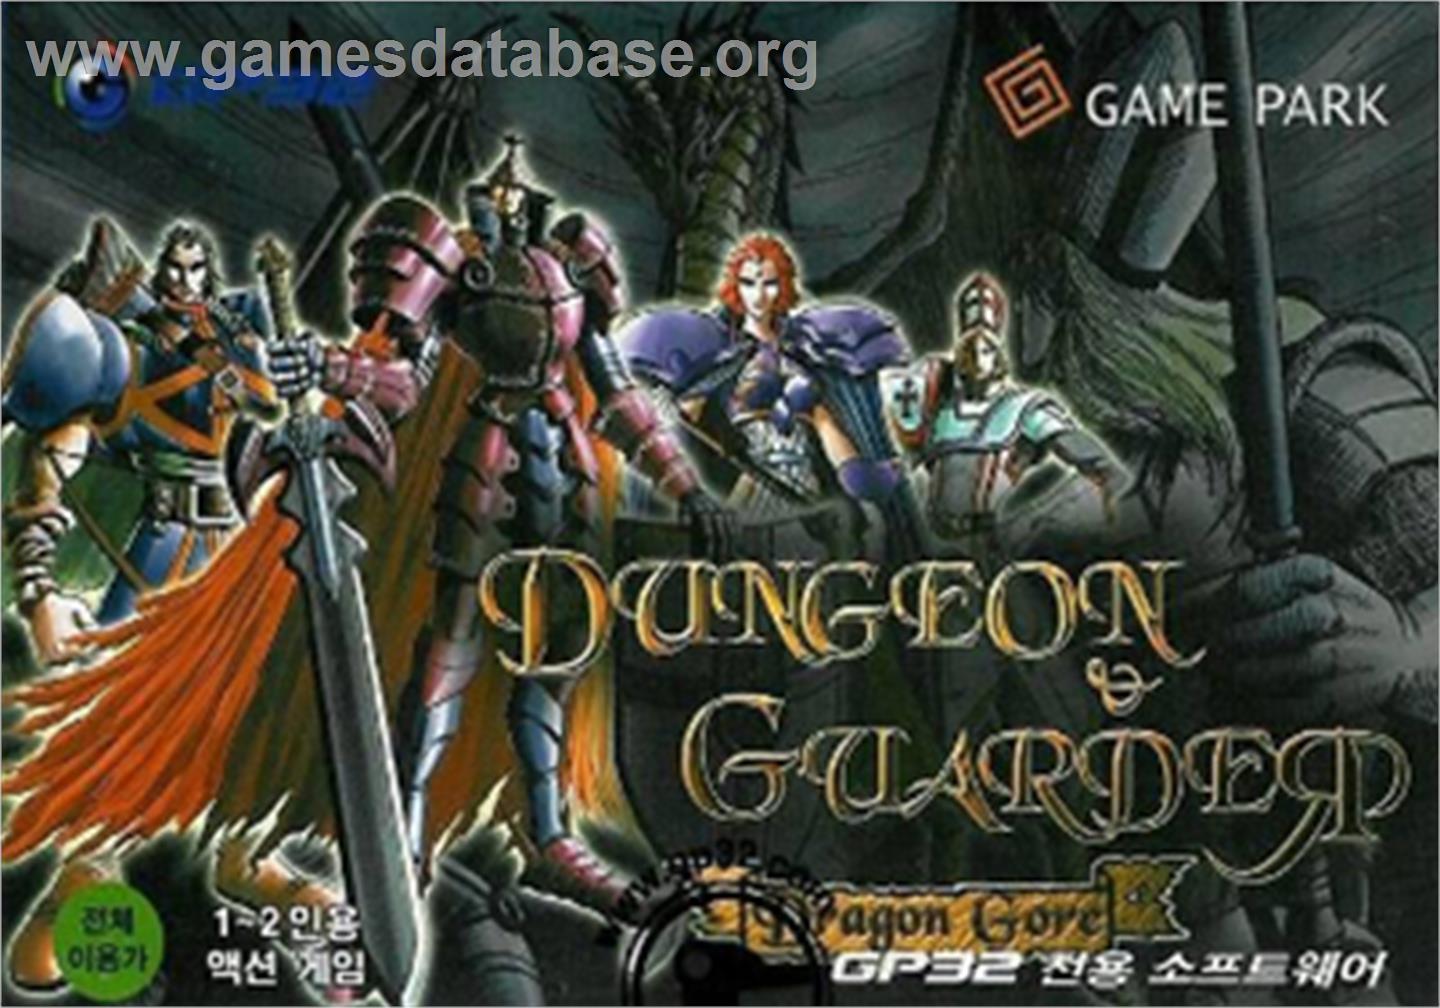 Dungeon & Guarder - Dragon Gore - Gamepark GP32 - Artwork - Box